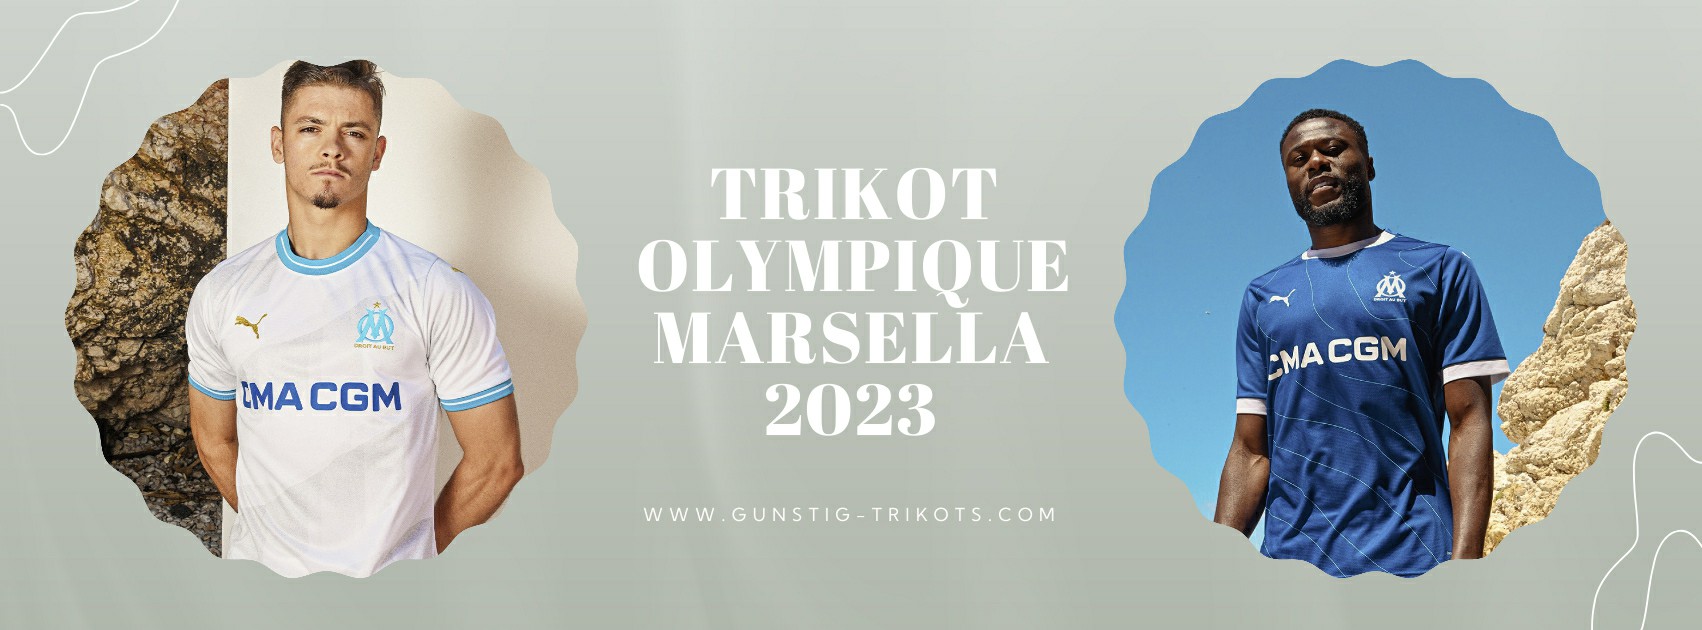 Olympique Marsella Trikot 2023-2024